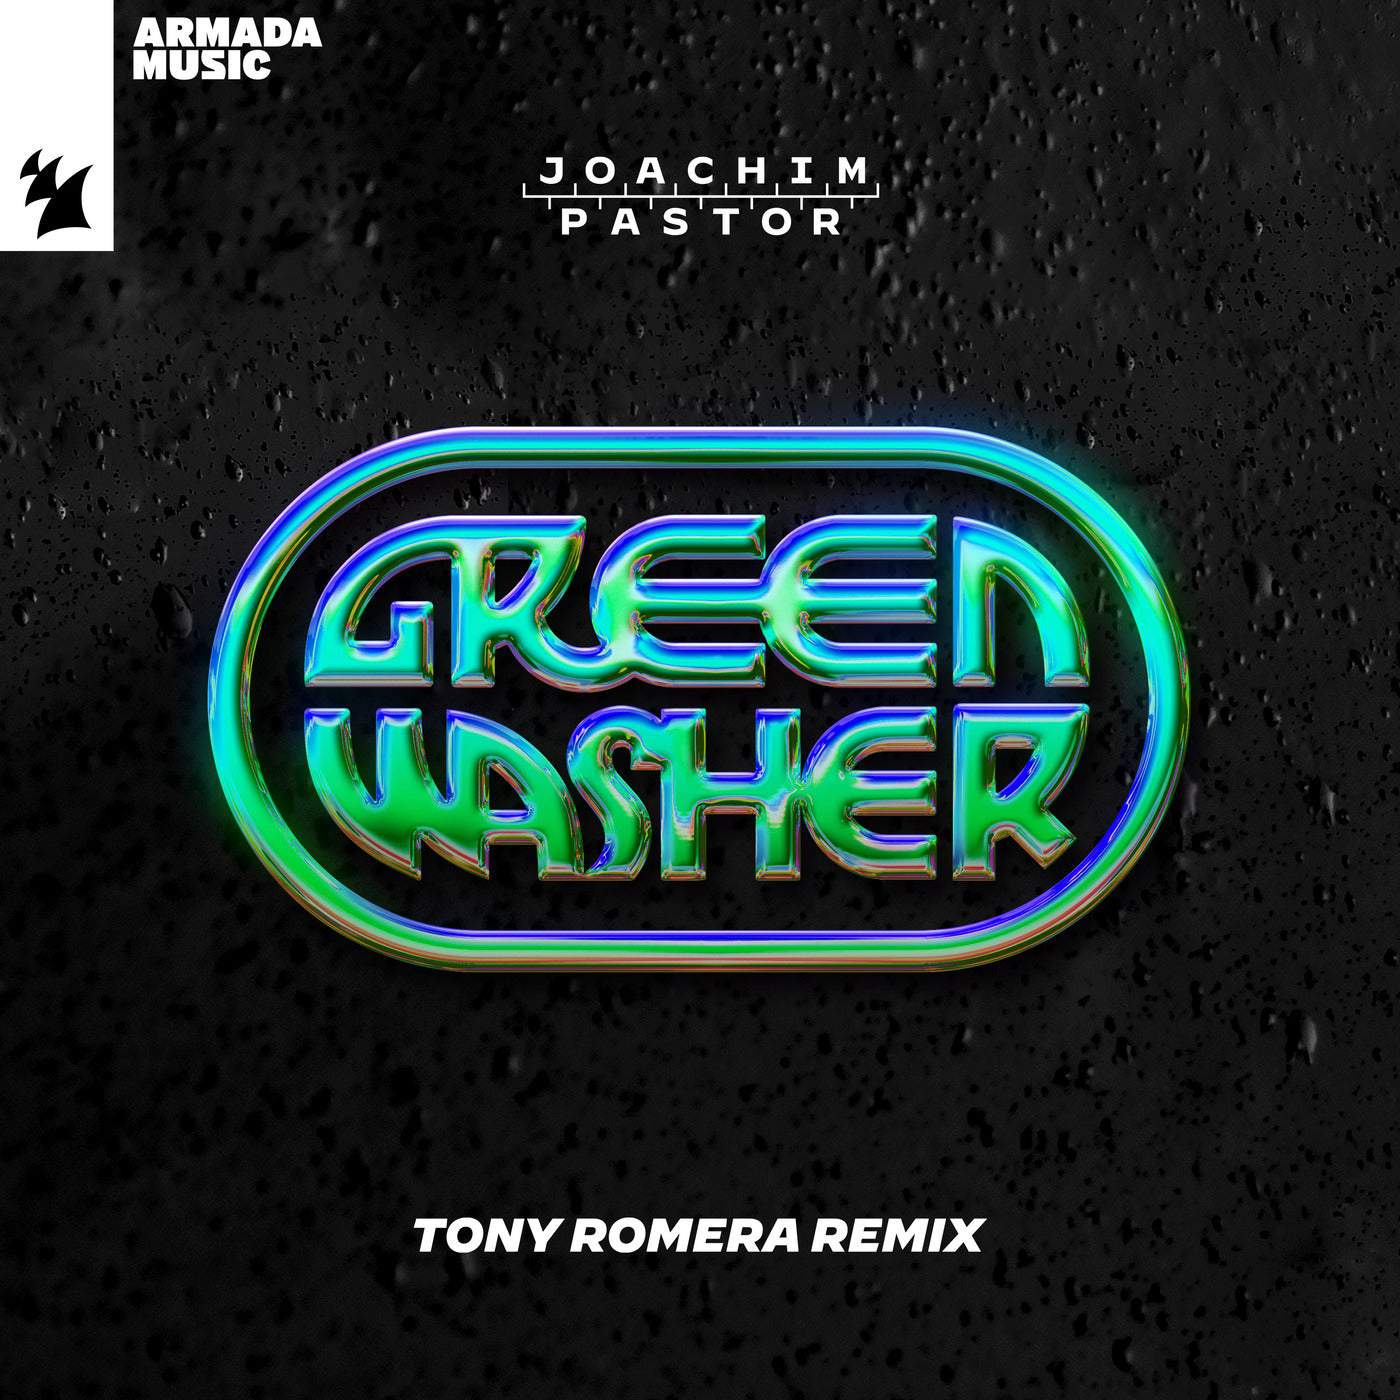 Download Joachim Pastor - Green Washer - Tony Romera Remix on Electrobuzz